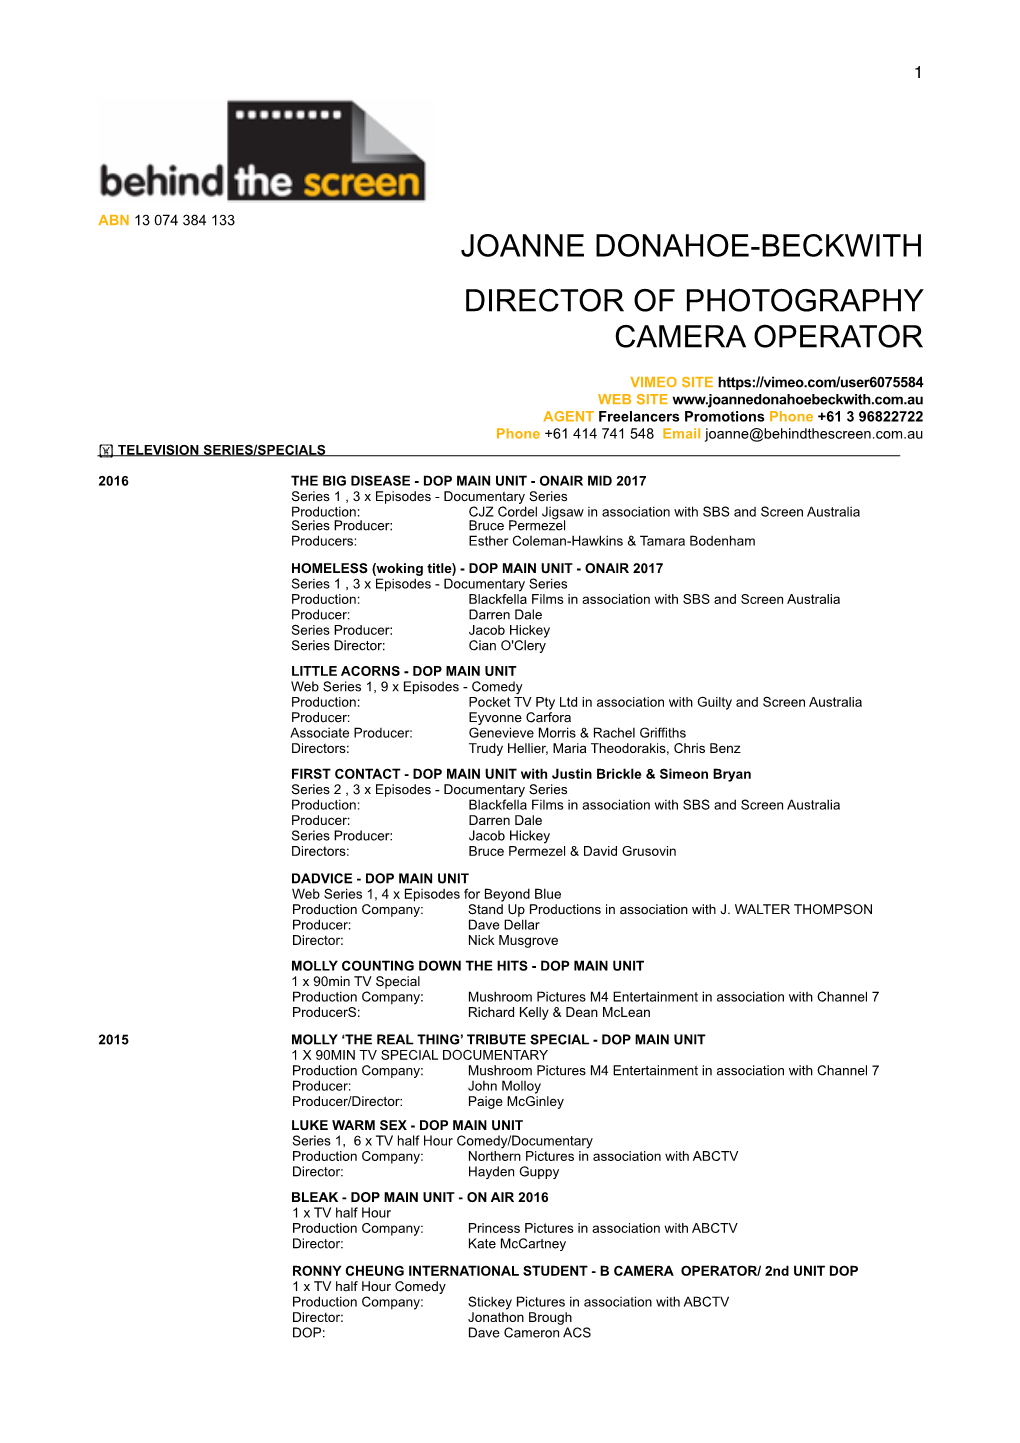 Joanne Donahoe-Beckwith DOP/Camera Operator CV